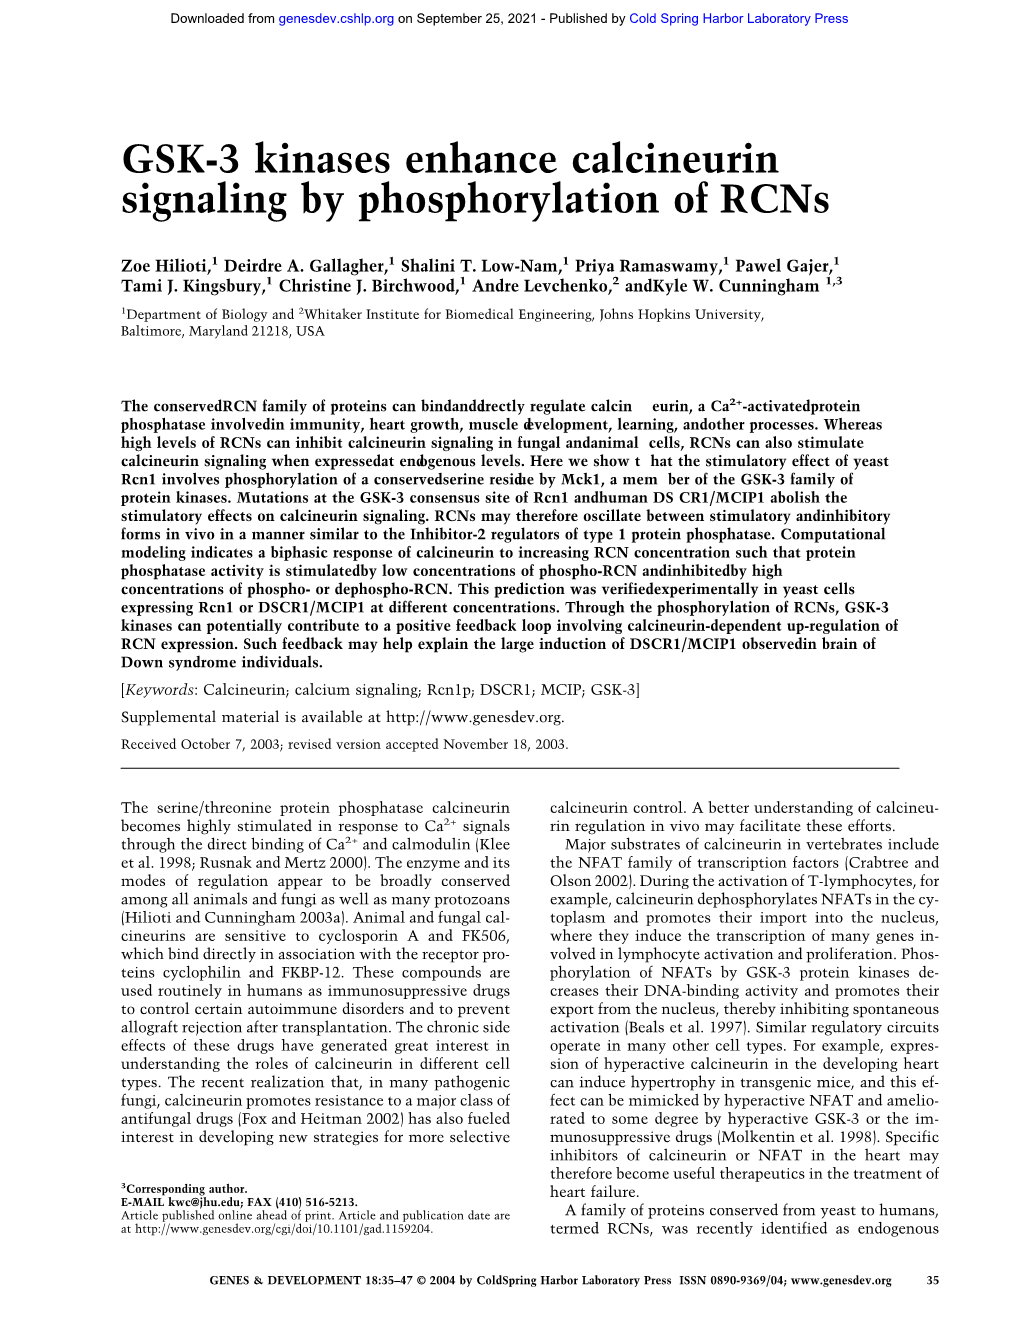 GSK-3 Kinases Enhance Calcineurin Signaling by Phosphorylation of Rcns